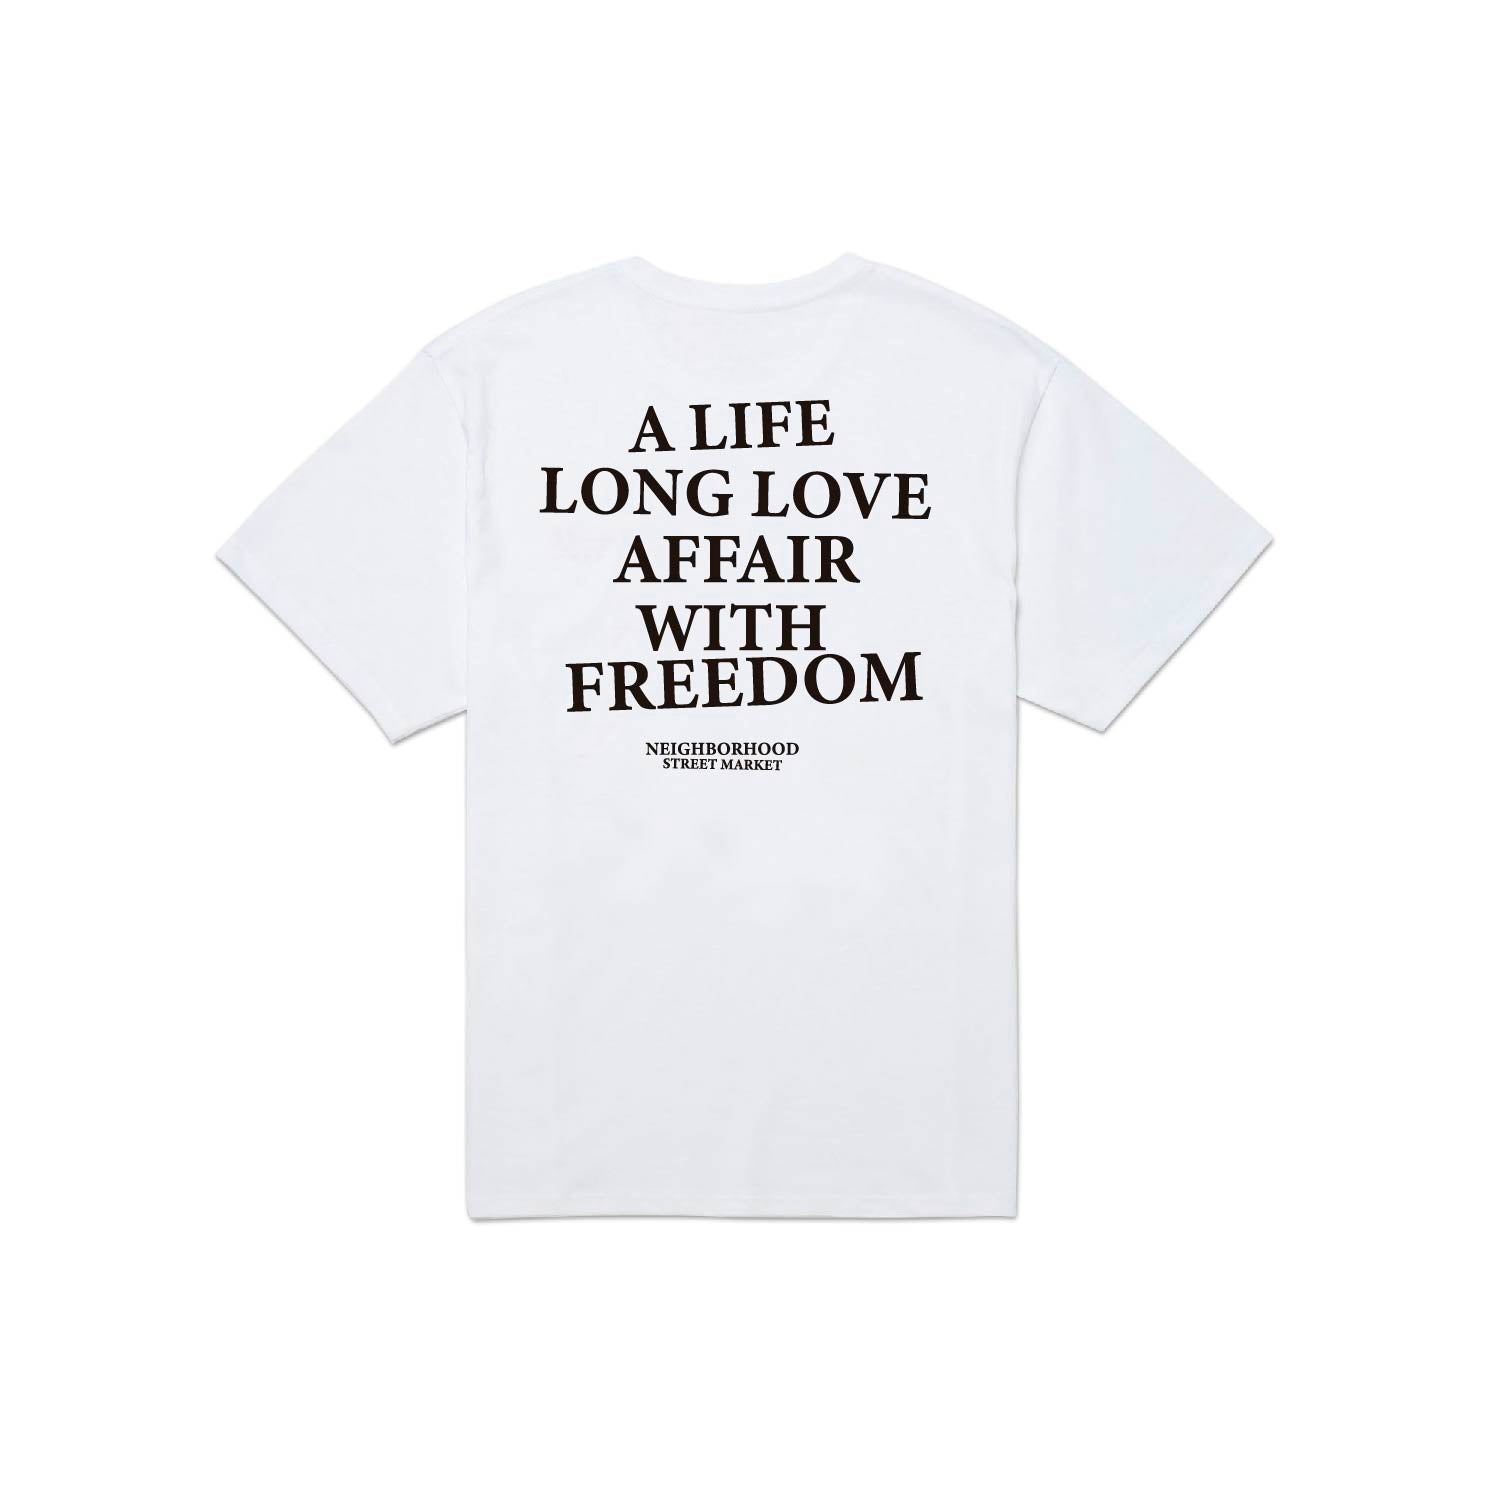 Streetmarket T-shirt Manifesto White